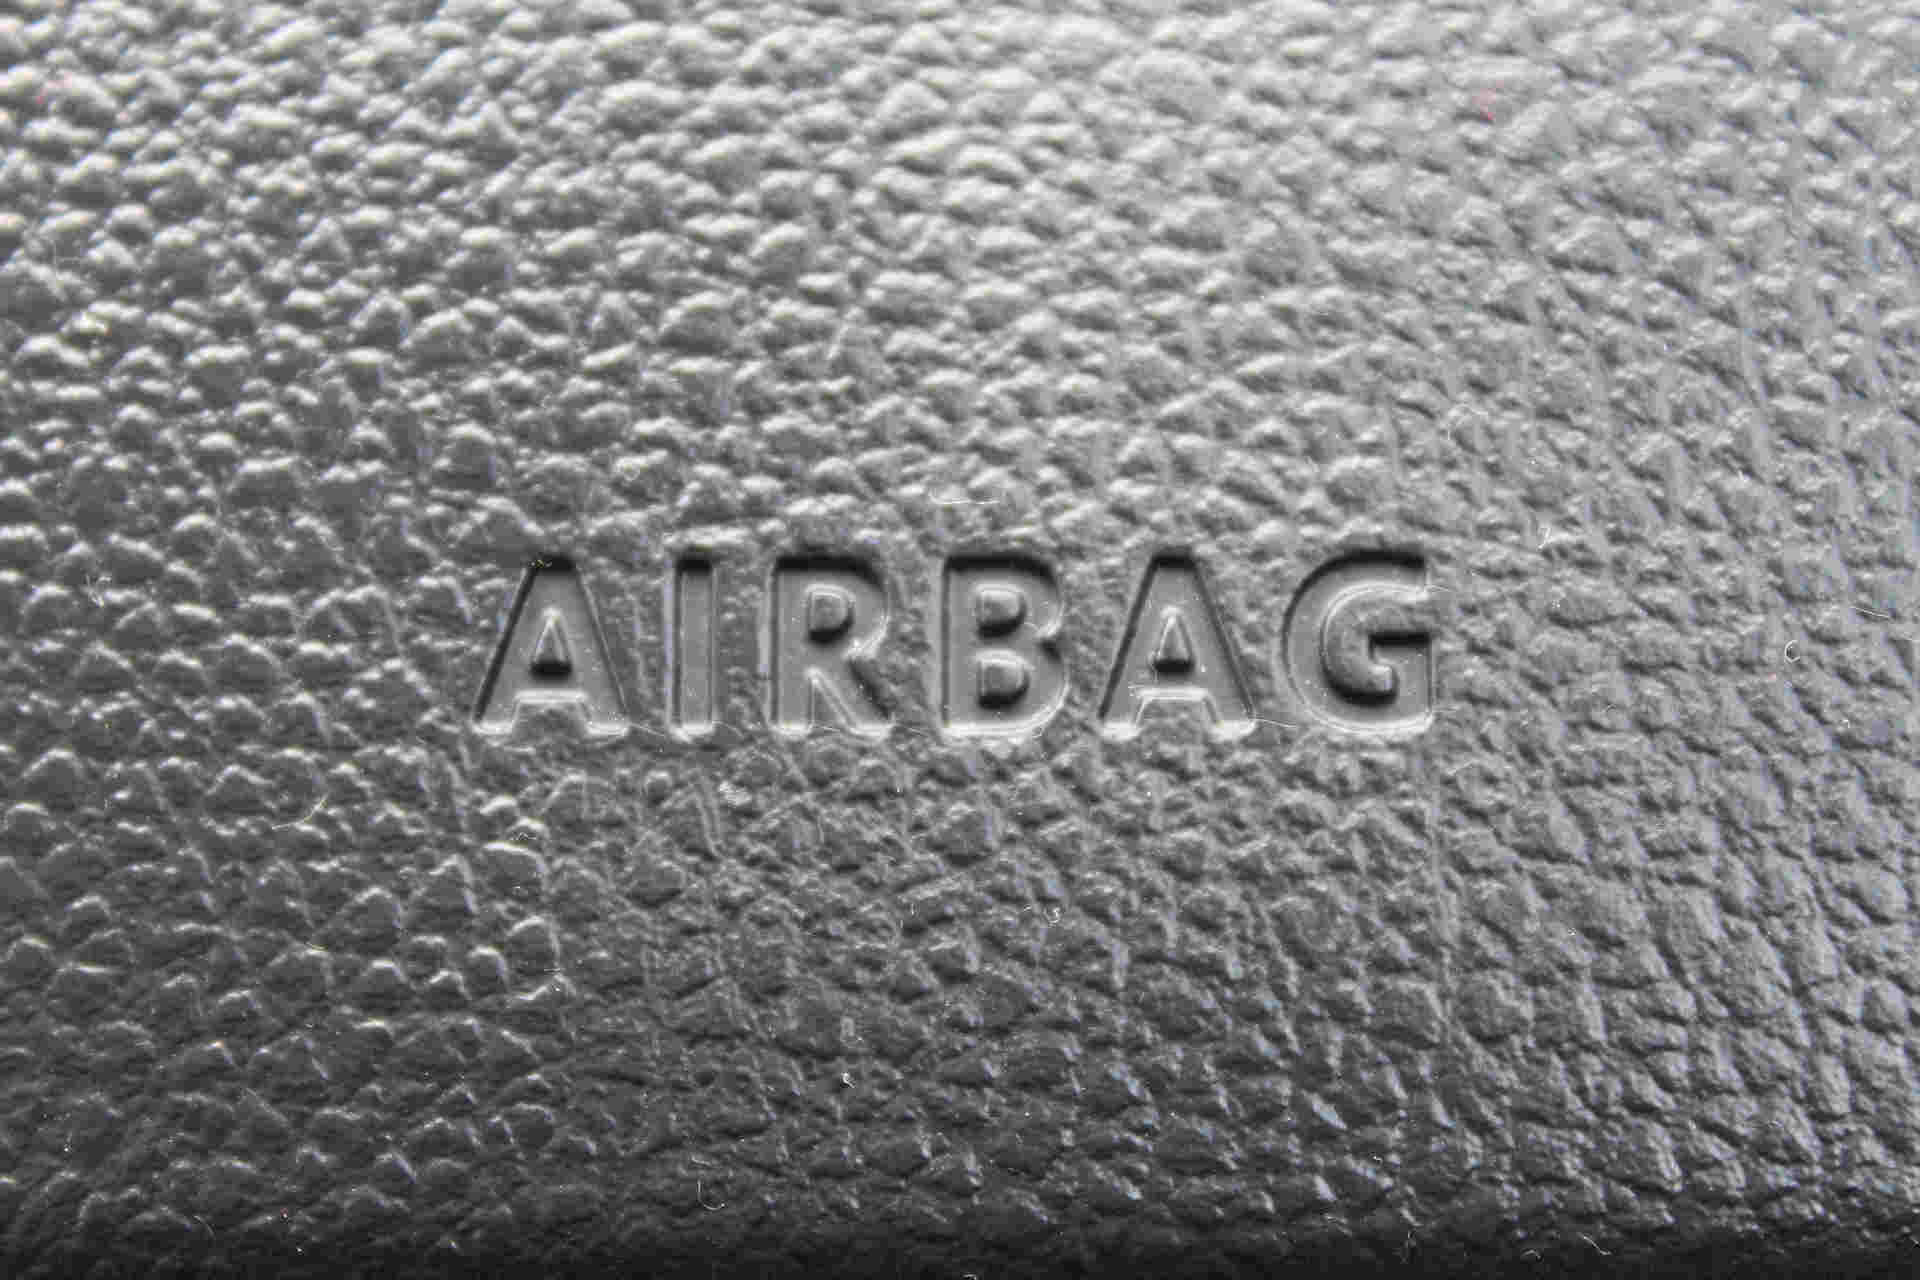 takata-airbag